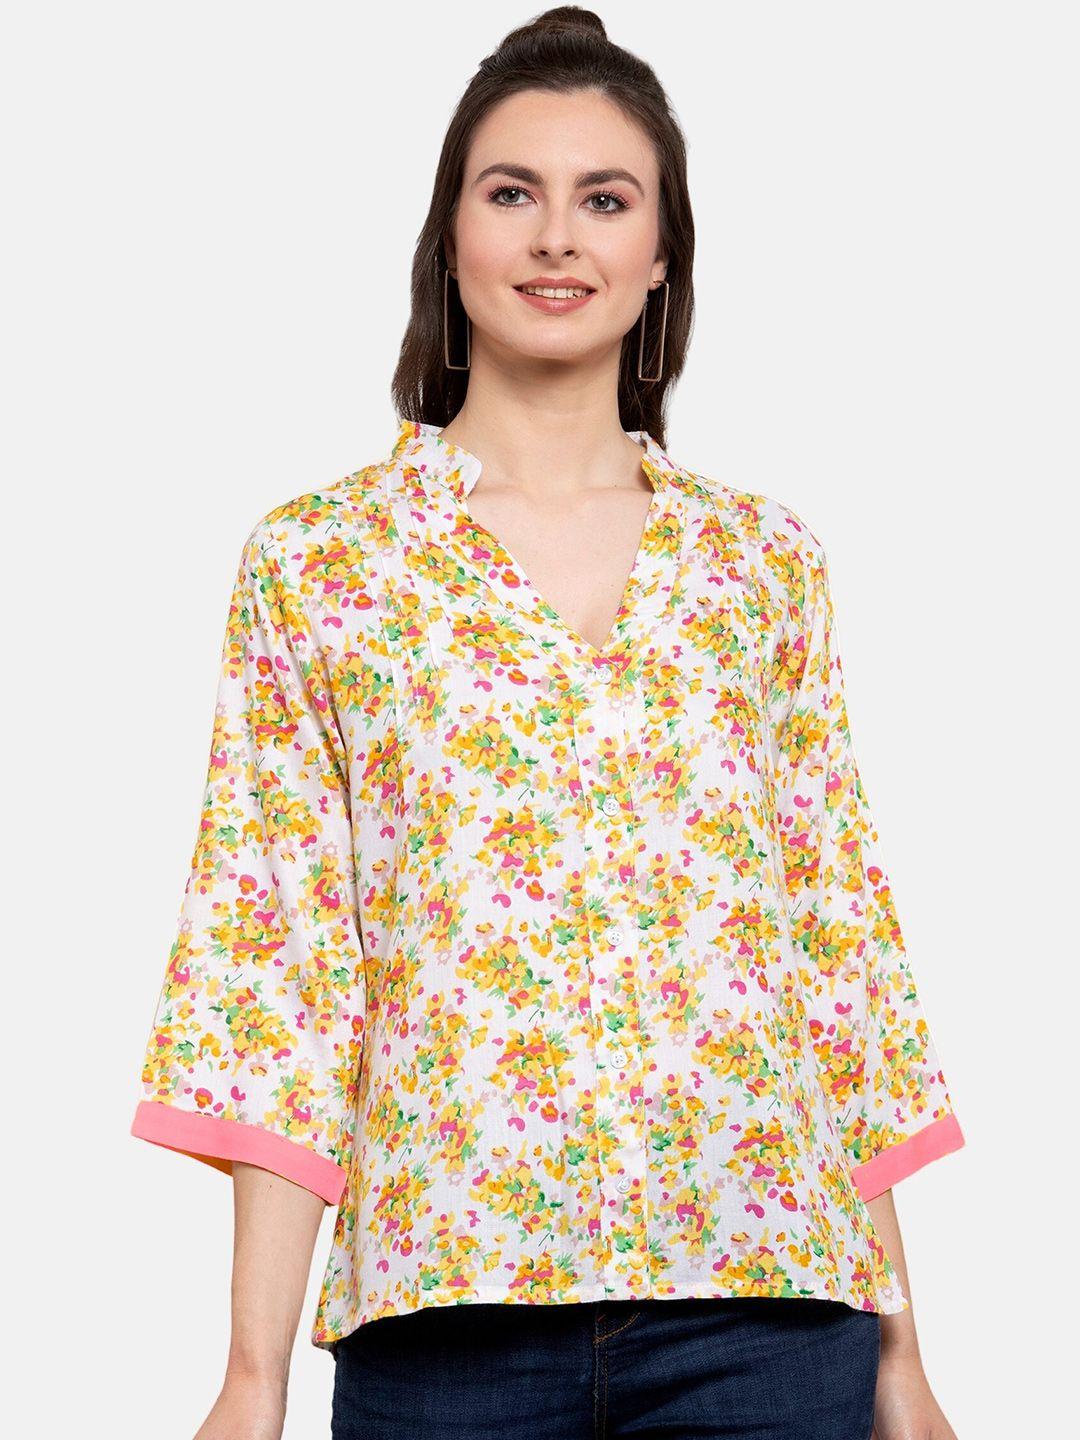 patrorna women yellow comfort floral printed casual shirt